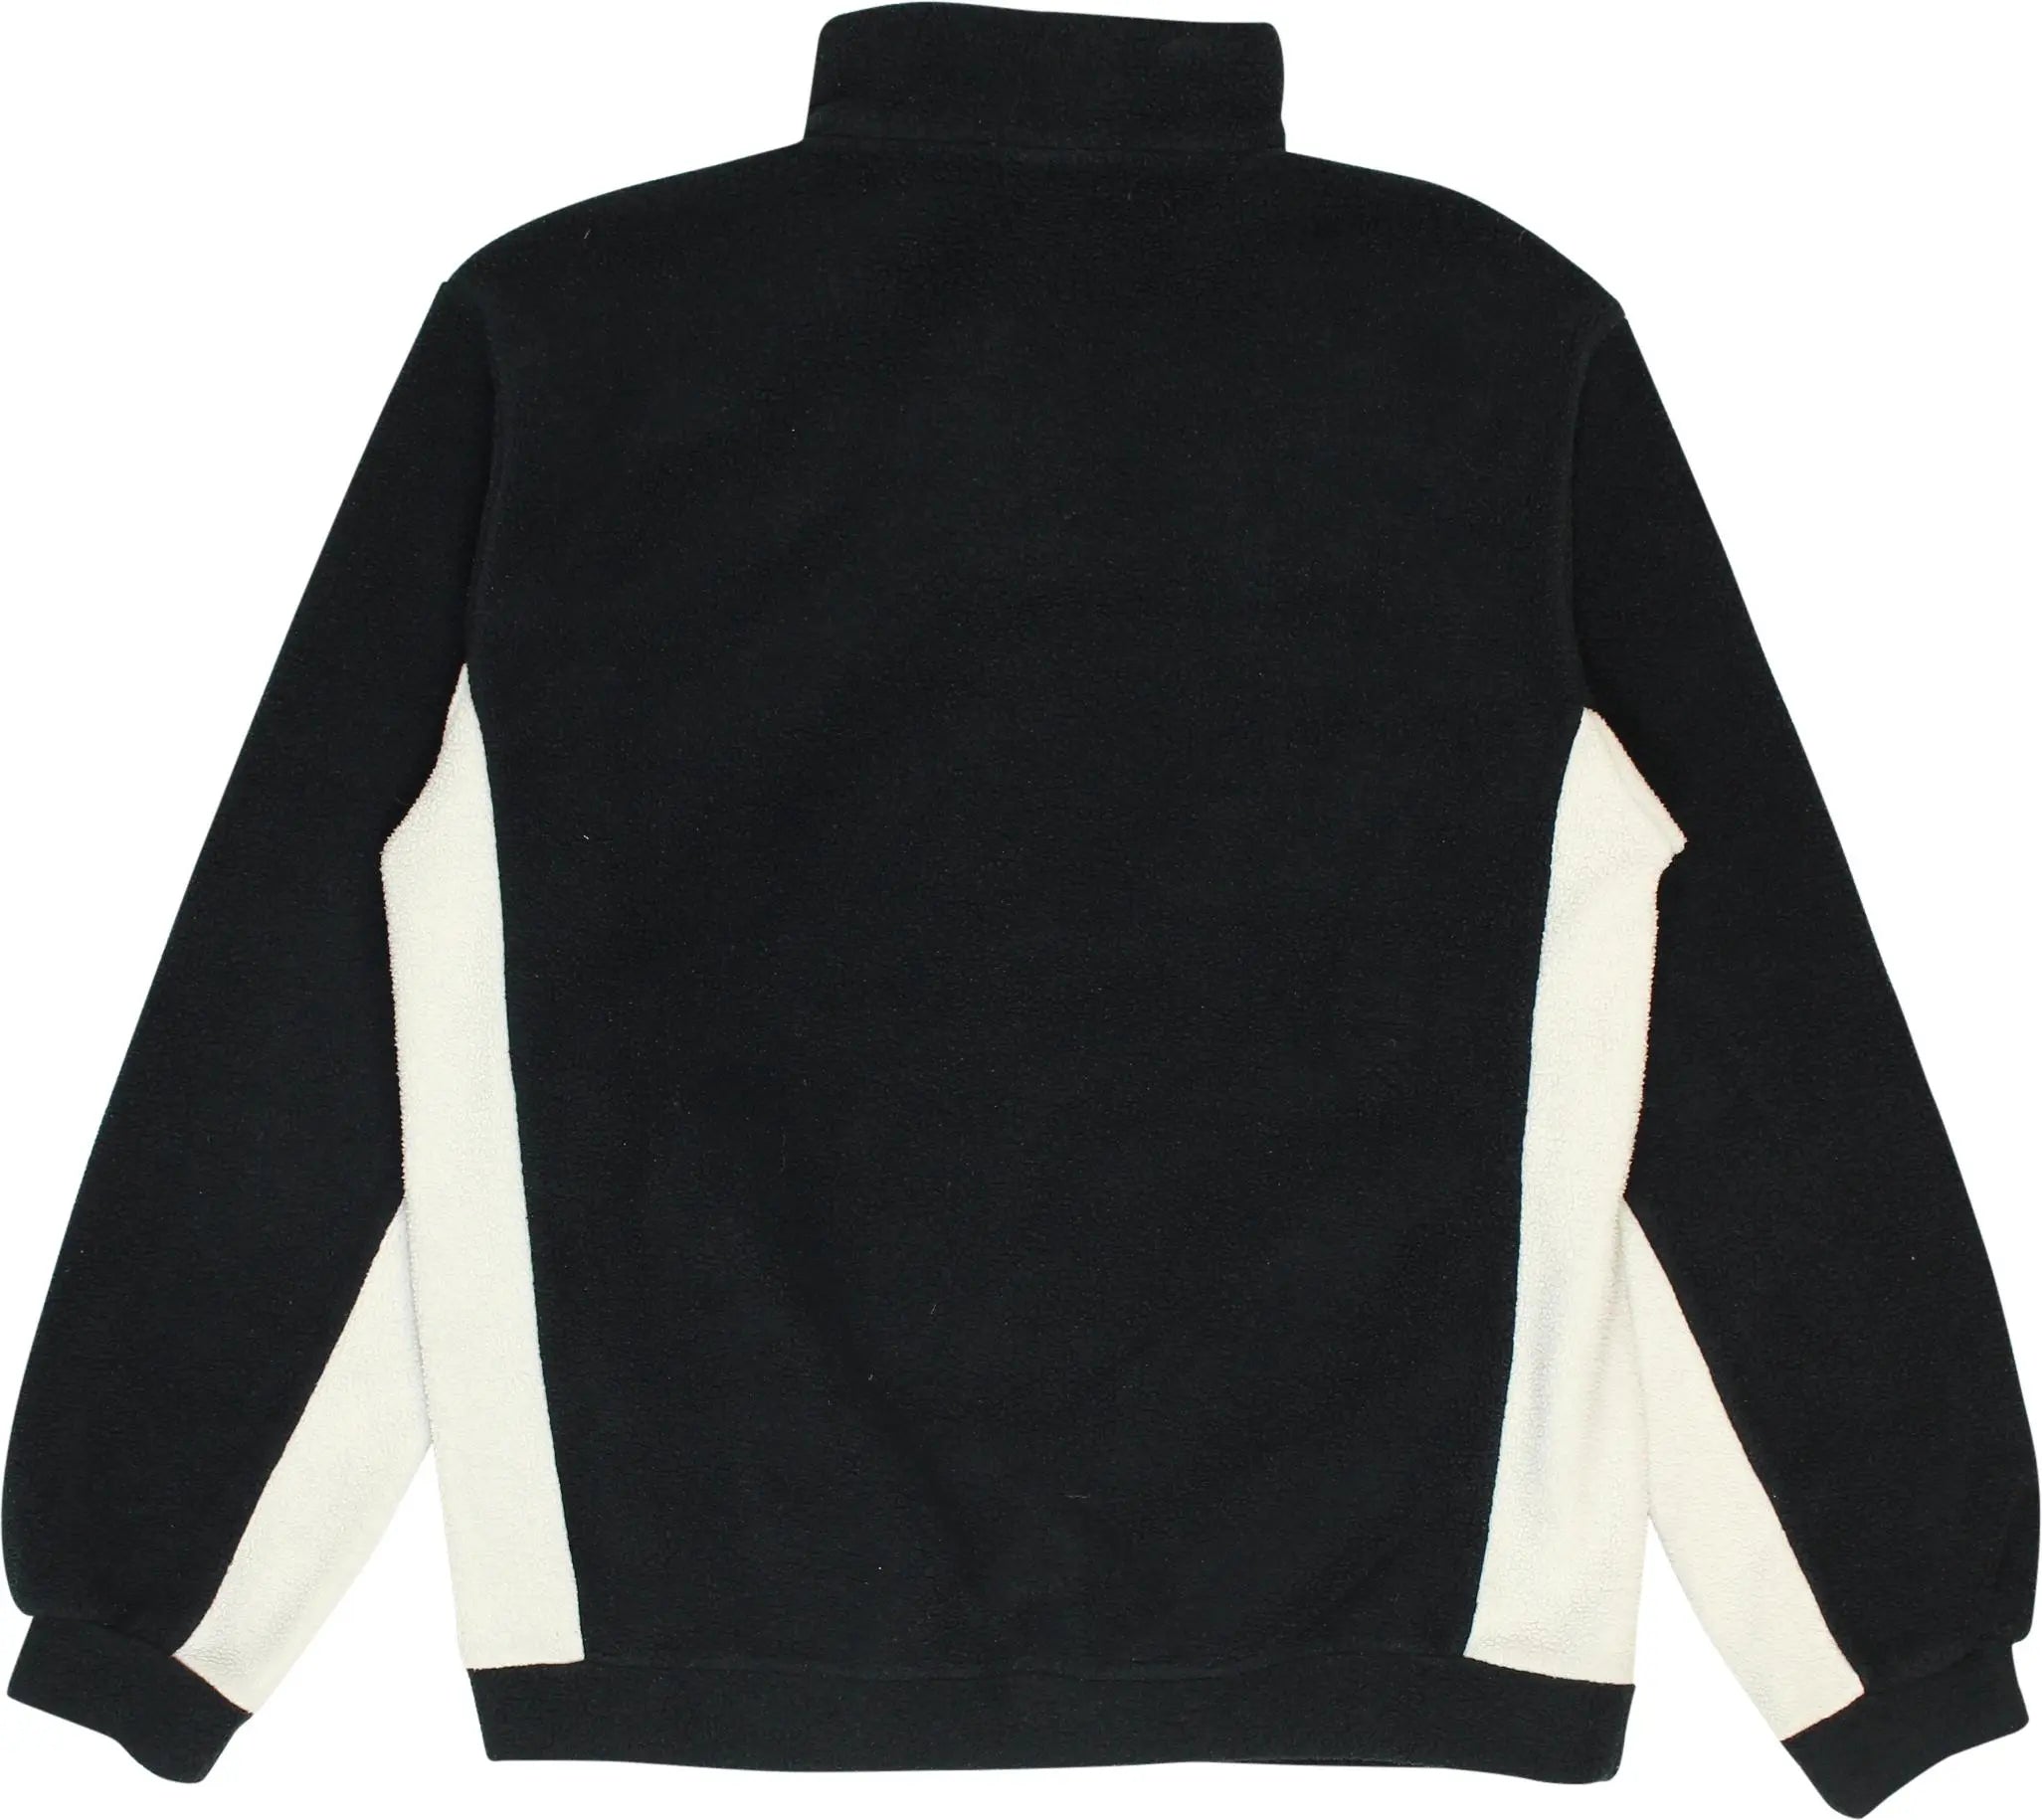 Fila - Fila Fleece Sweater- ThriftTale.com - Vintage and second handclothing